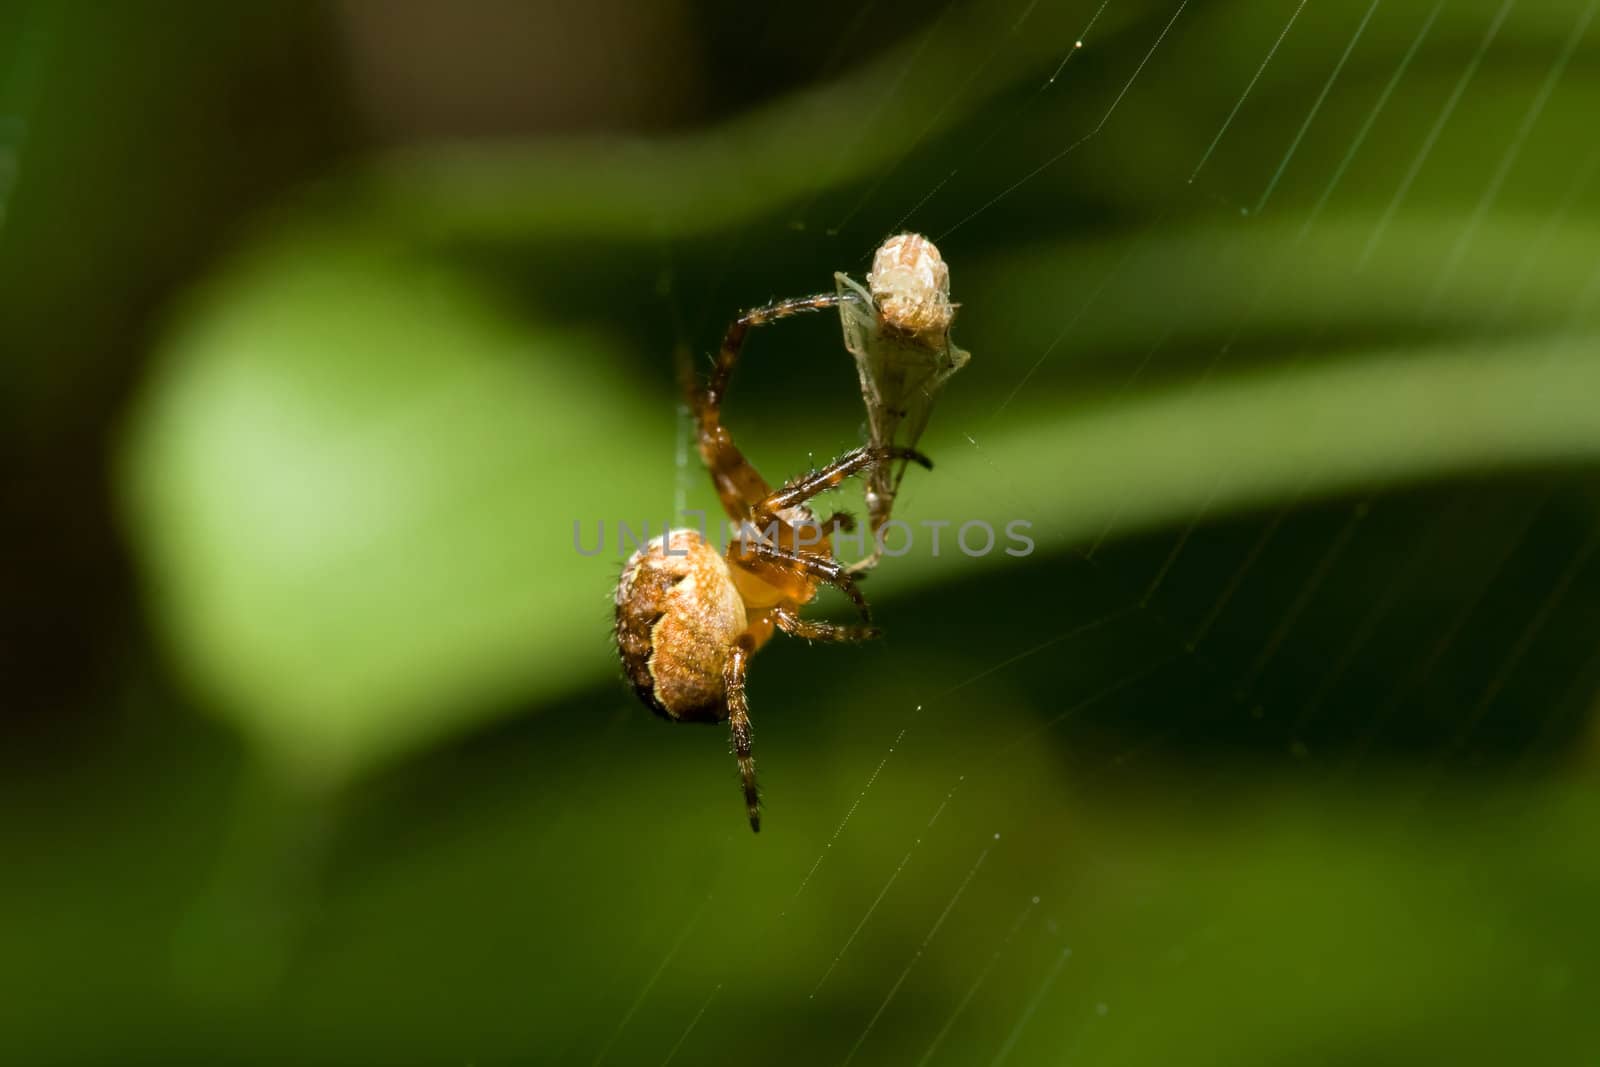 Female Cobweb Spider and Pray by Coffee999